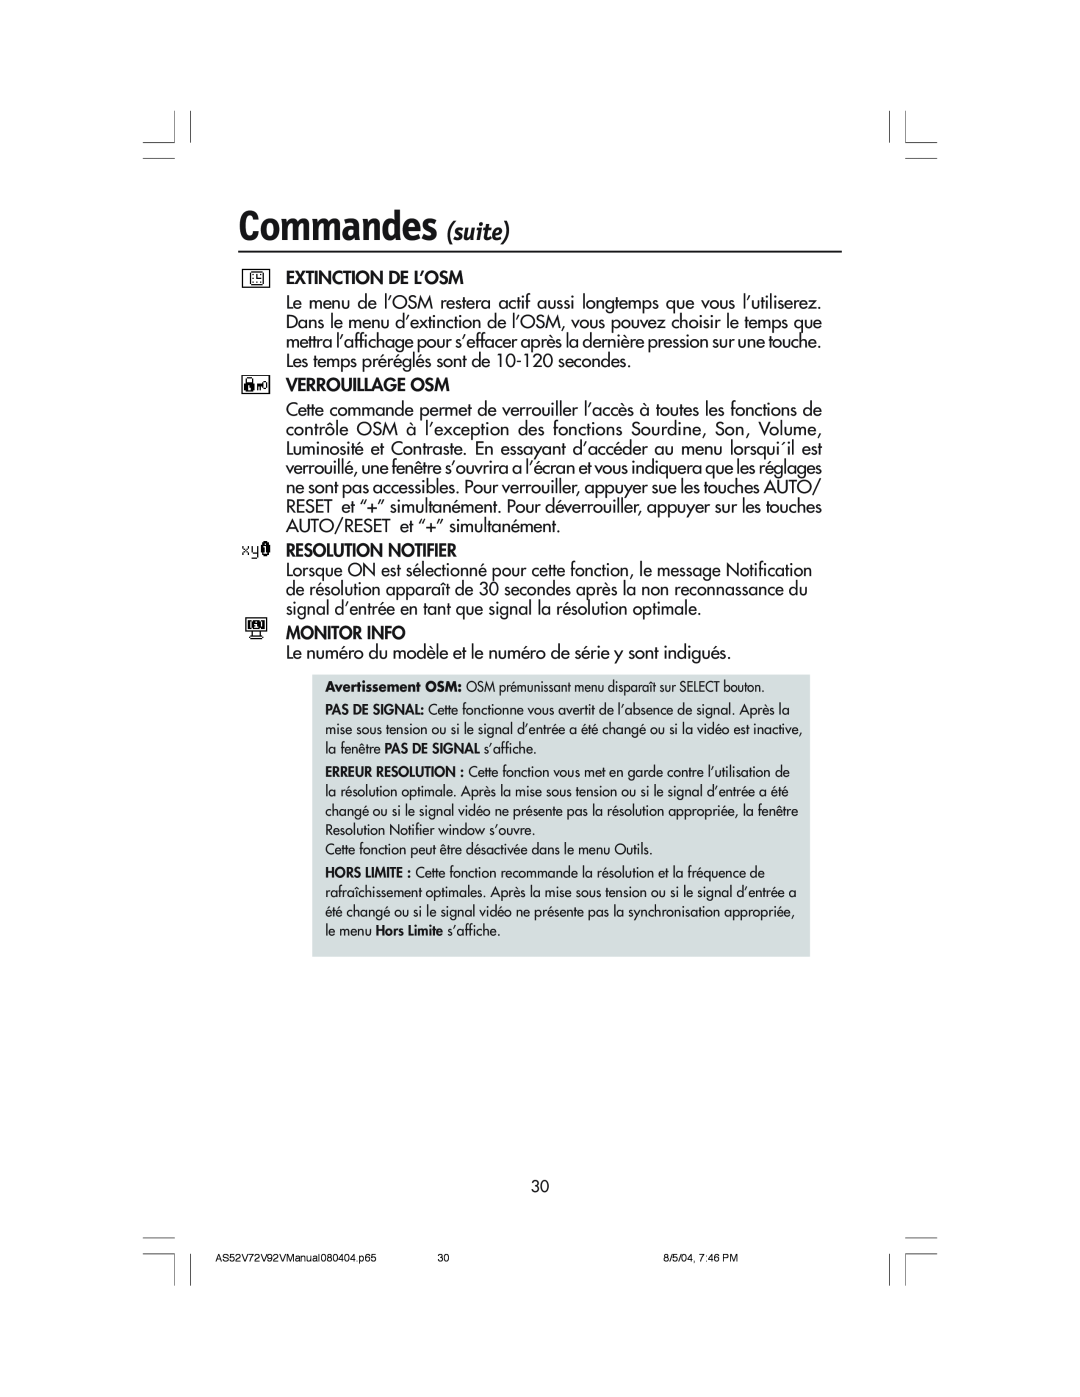 NEC LCD72V, LCD52V manual Commandes suite, Avertissement OSM OSM prŽmunissant menu dispara”t sur SELECT bouton 